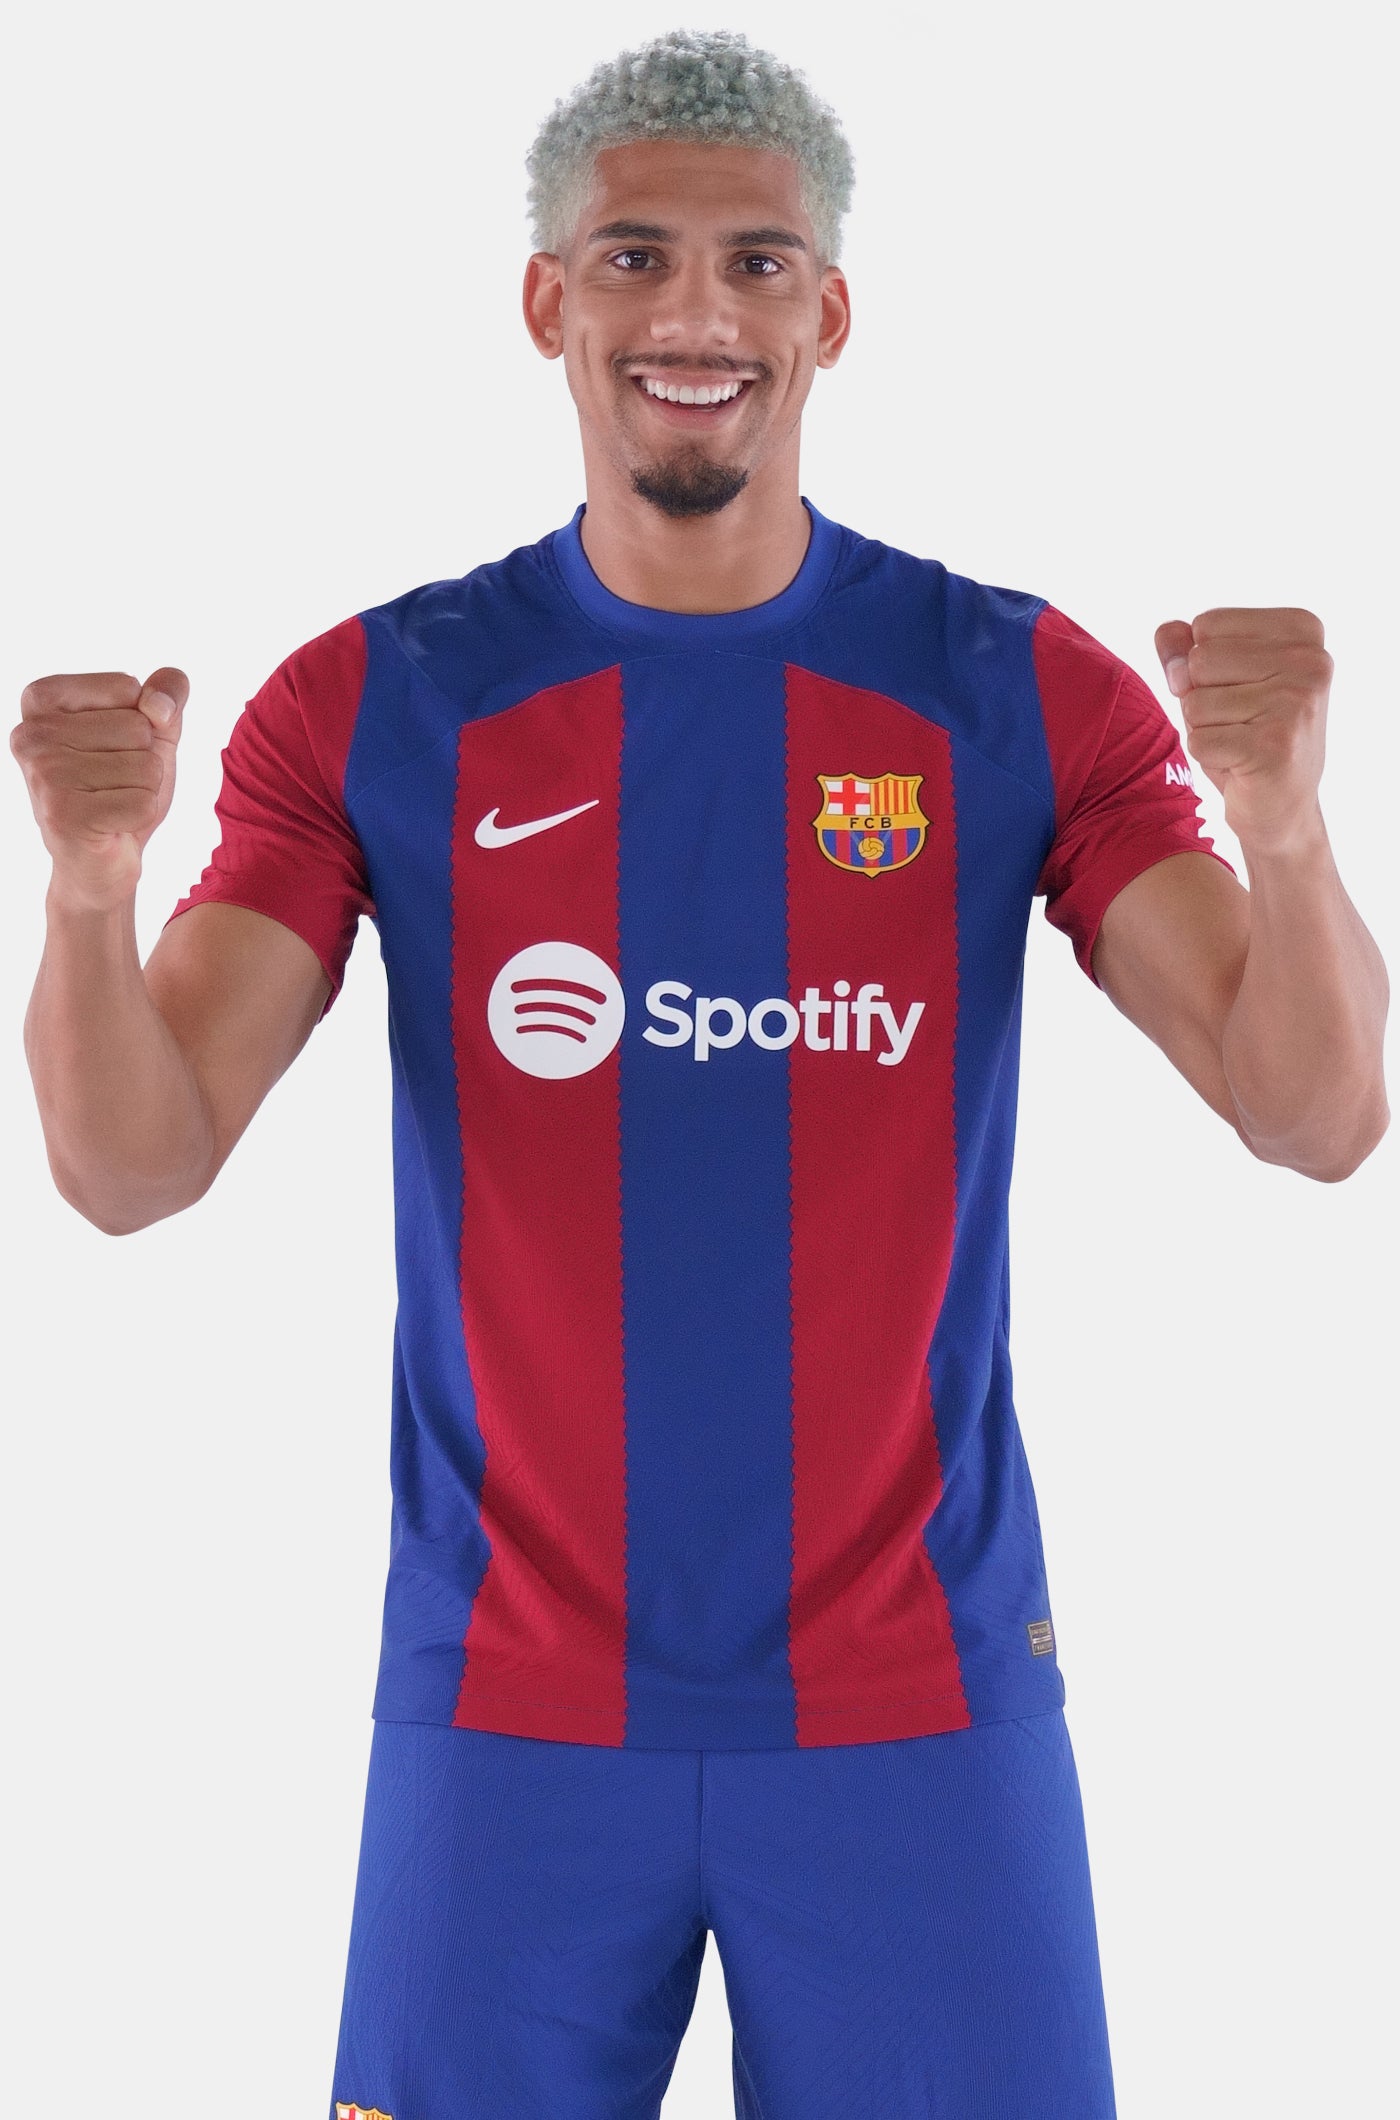 4. R. Araujo – Barça Official Store Spotify Camp Nou